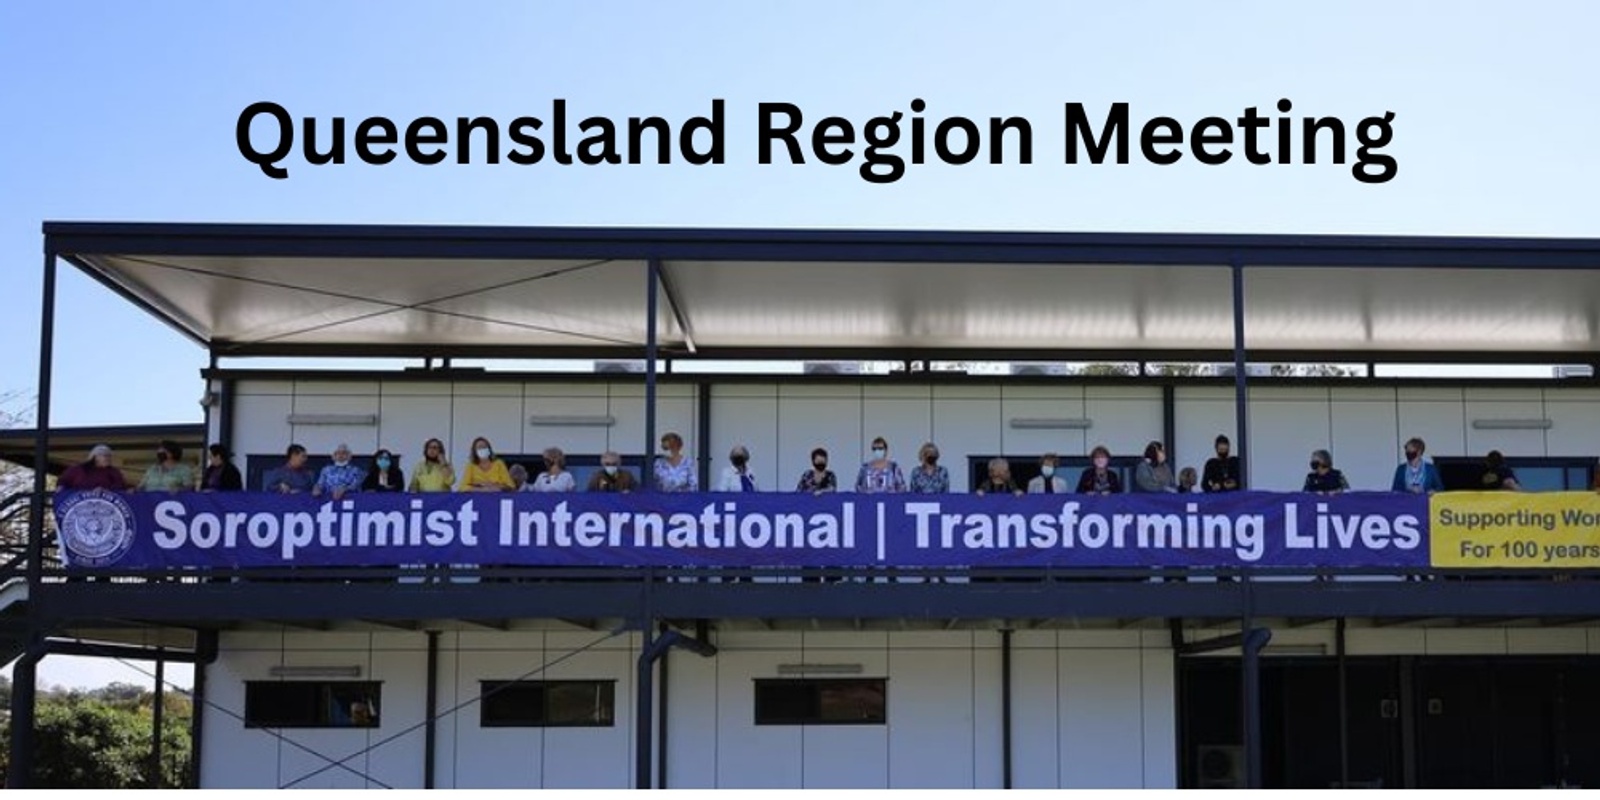 Banner image for Queensland Region meeting 